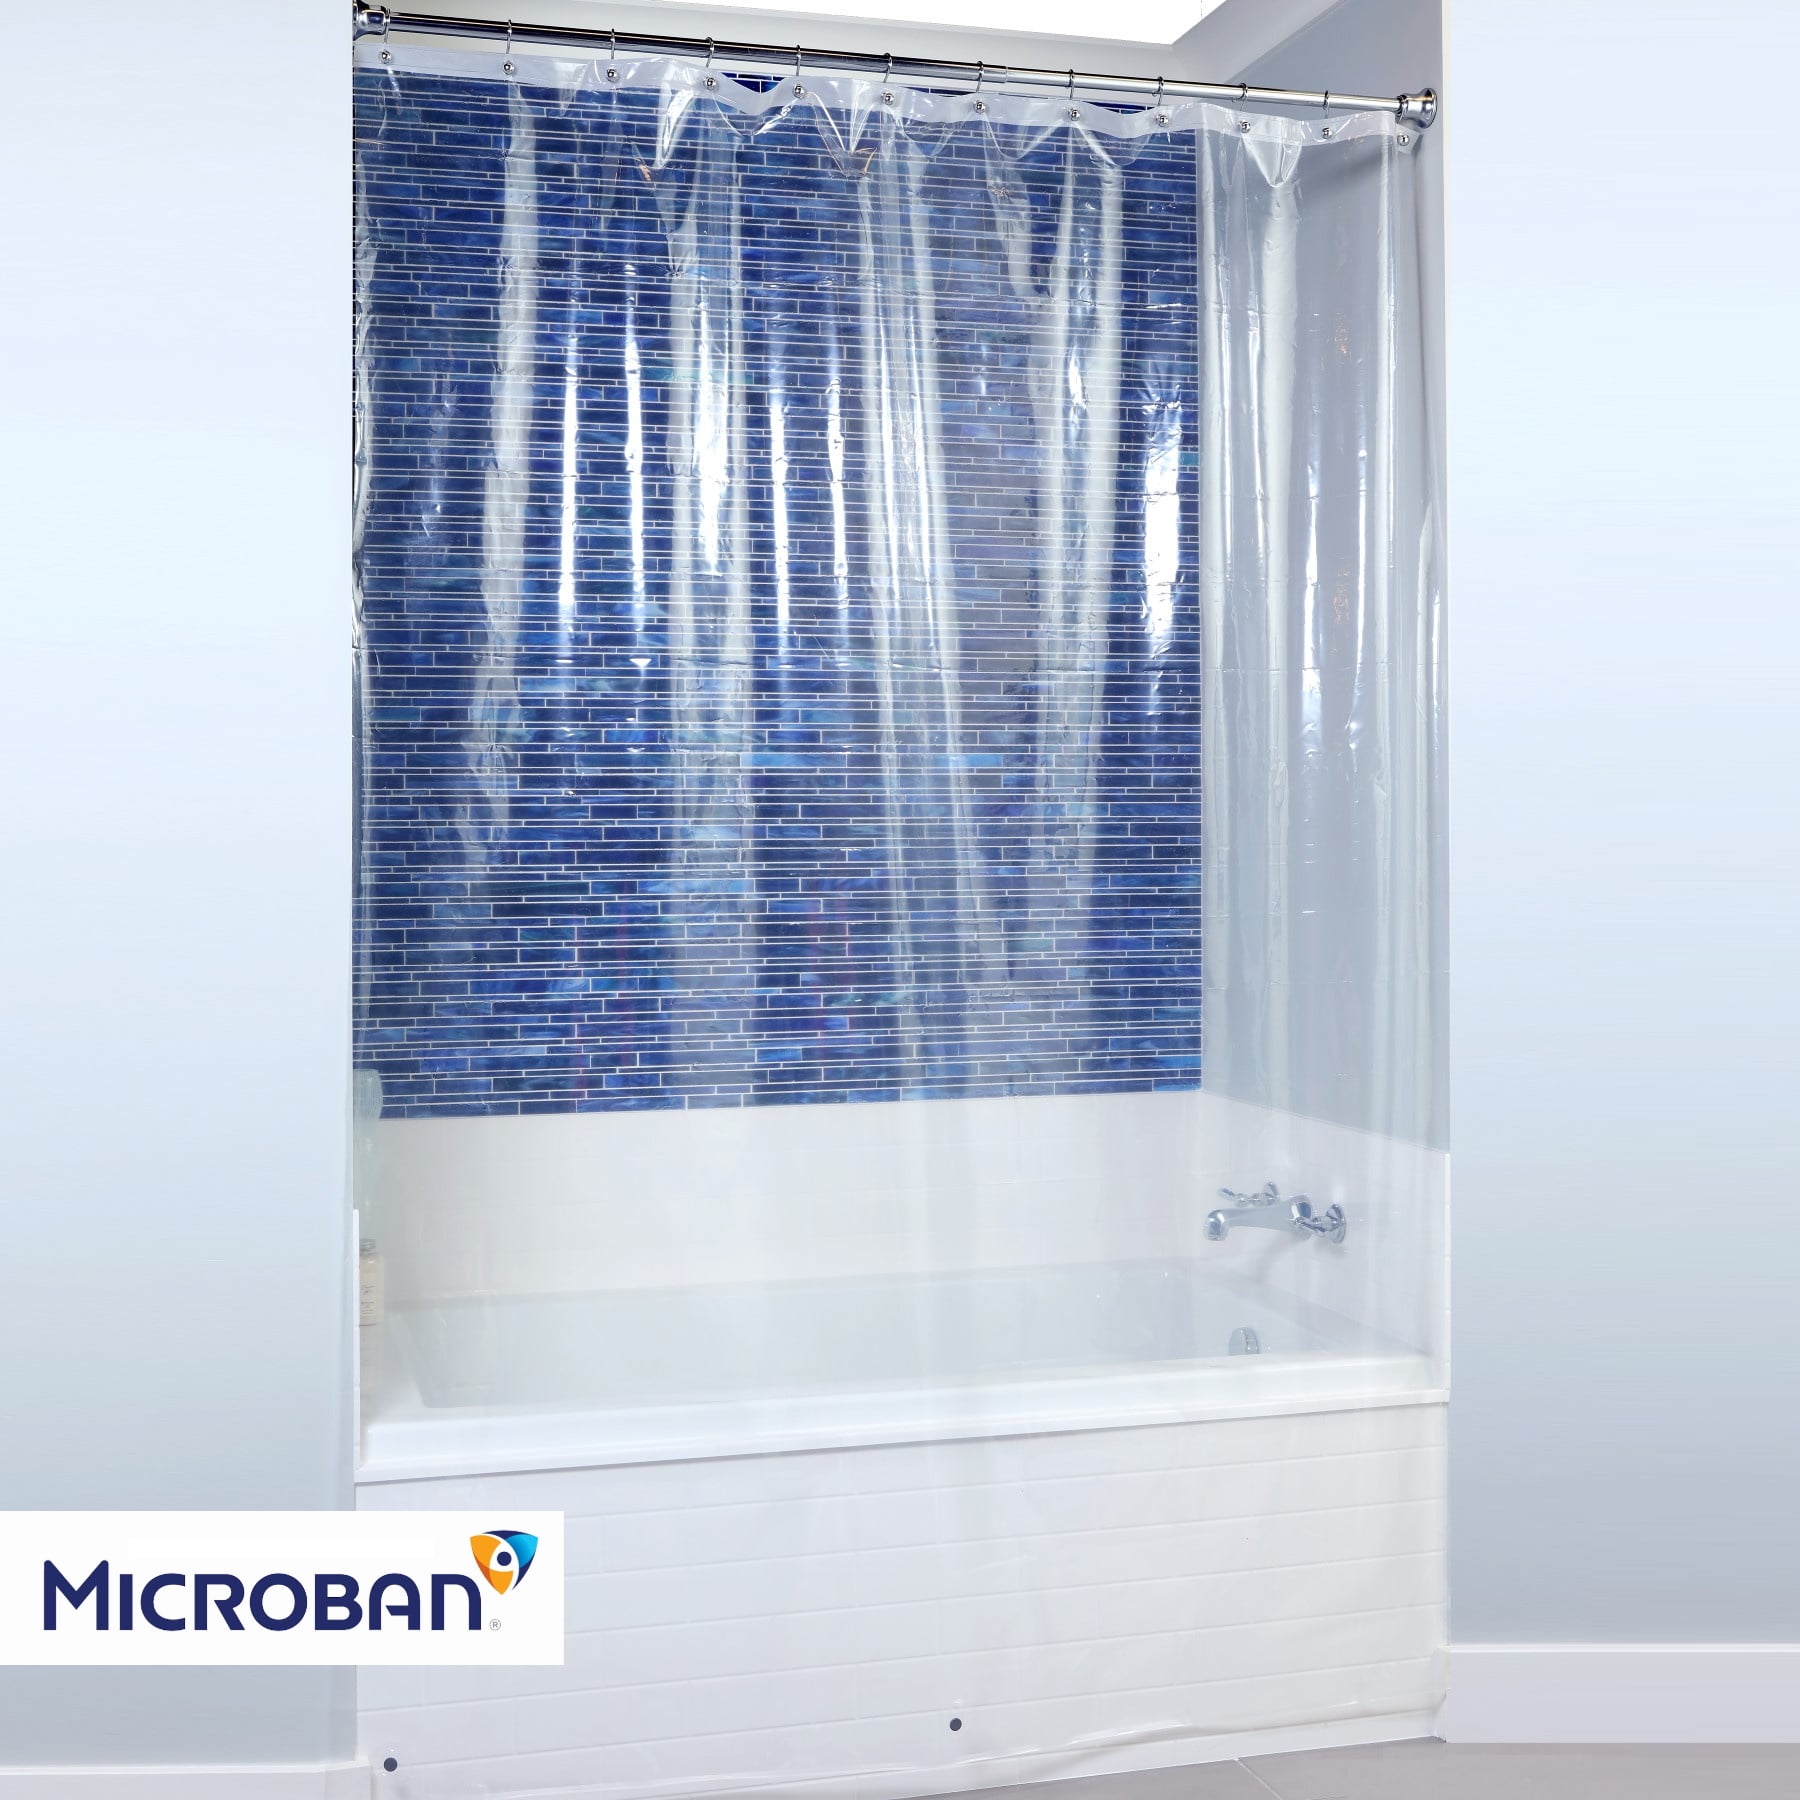 No Odor Heavy Duty PEVA Shower Curtain Liner for Bathroom Shower and Tub Chlorine Free 72 x 84 Arctic Blue Long Waterproof mDesign 2 Pack 3 Gauge 